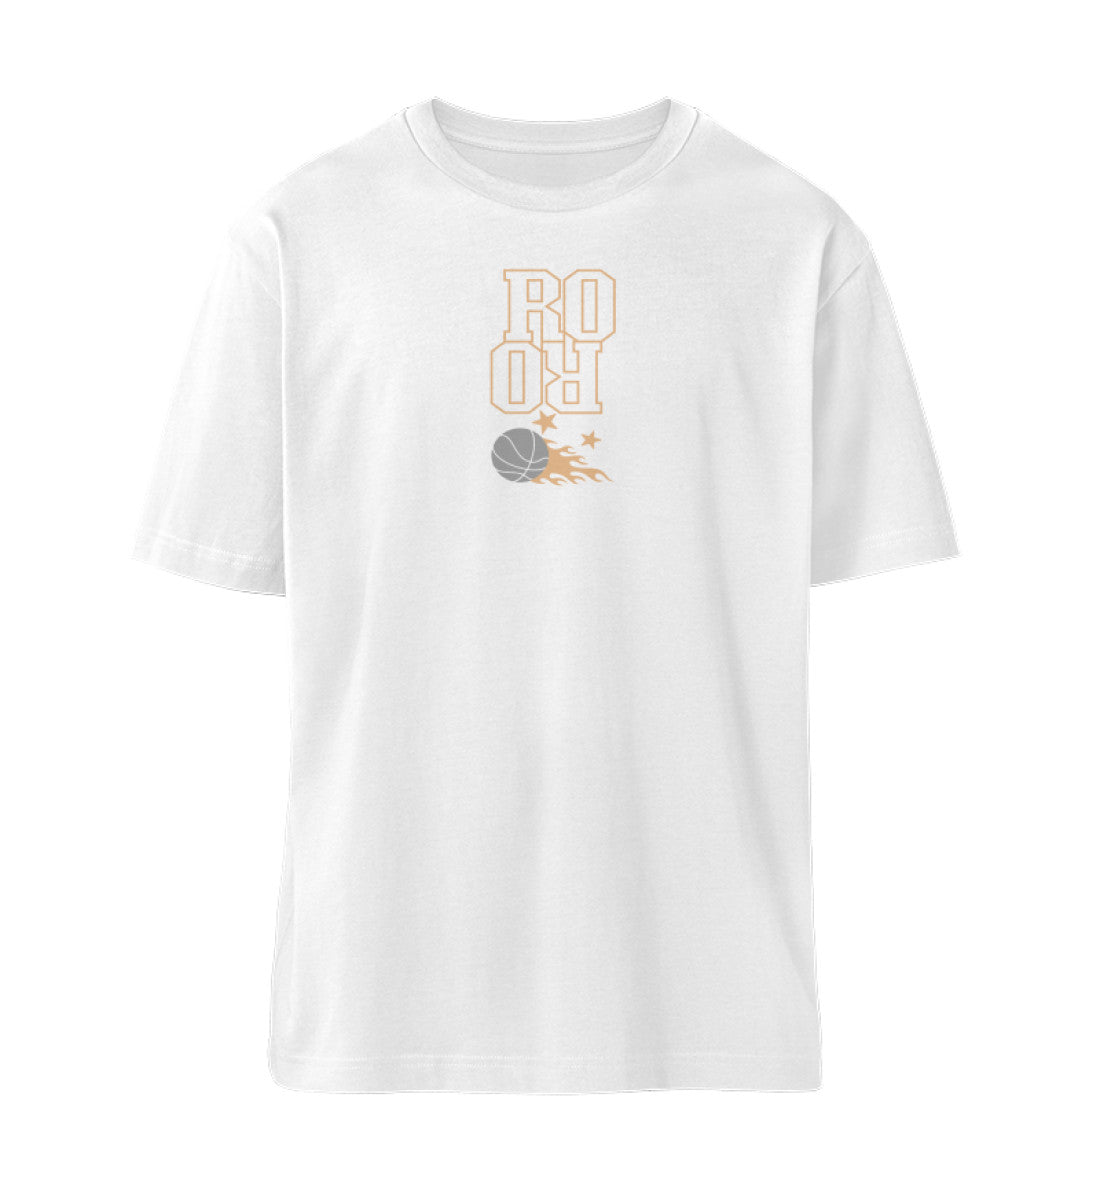 Weißes T-Shirt Unisex Relaxed Fit für Frauen und Männer bedruckt mit dem Design der Roger Rockawoo Kollektion Basketball Streetball Buzzer Beater